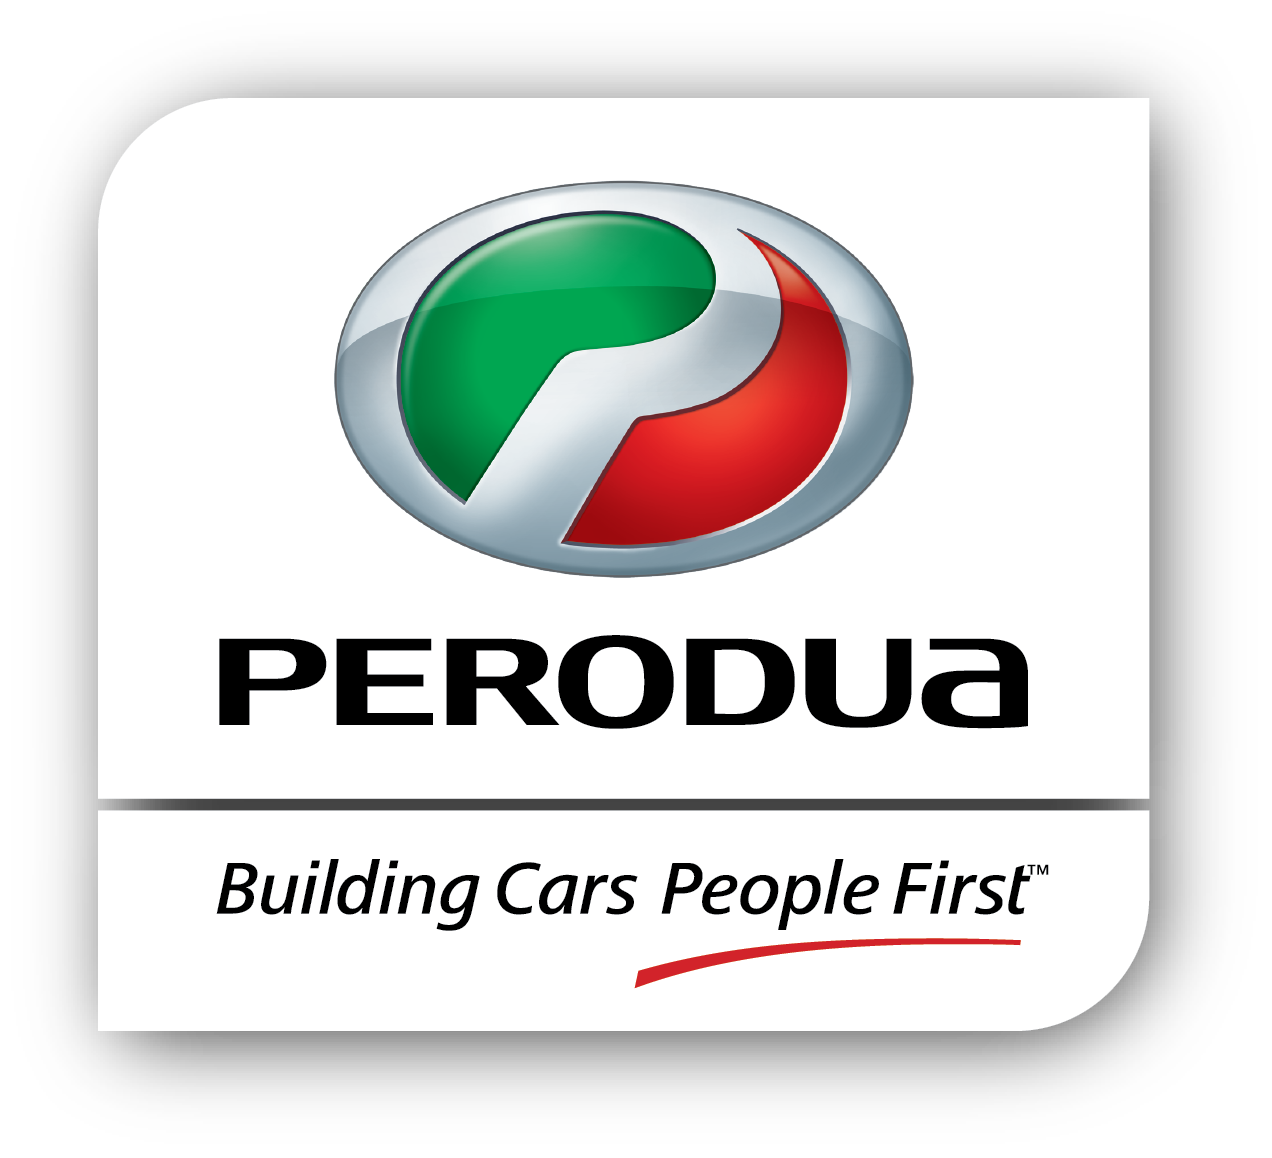 Perodua Global Manufacturing Sdn Bhd - Salma Nurane